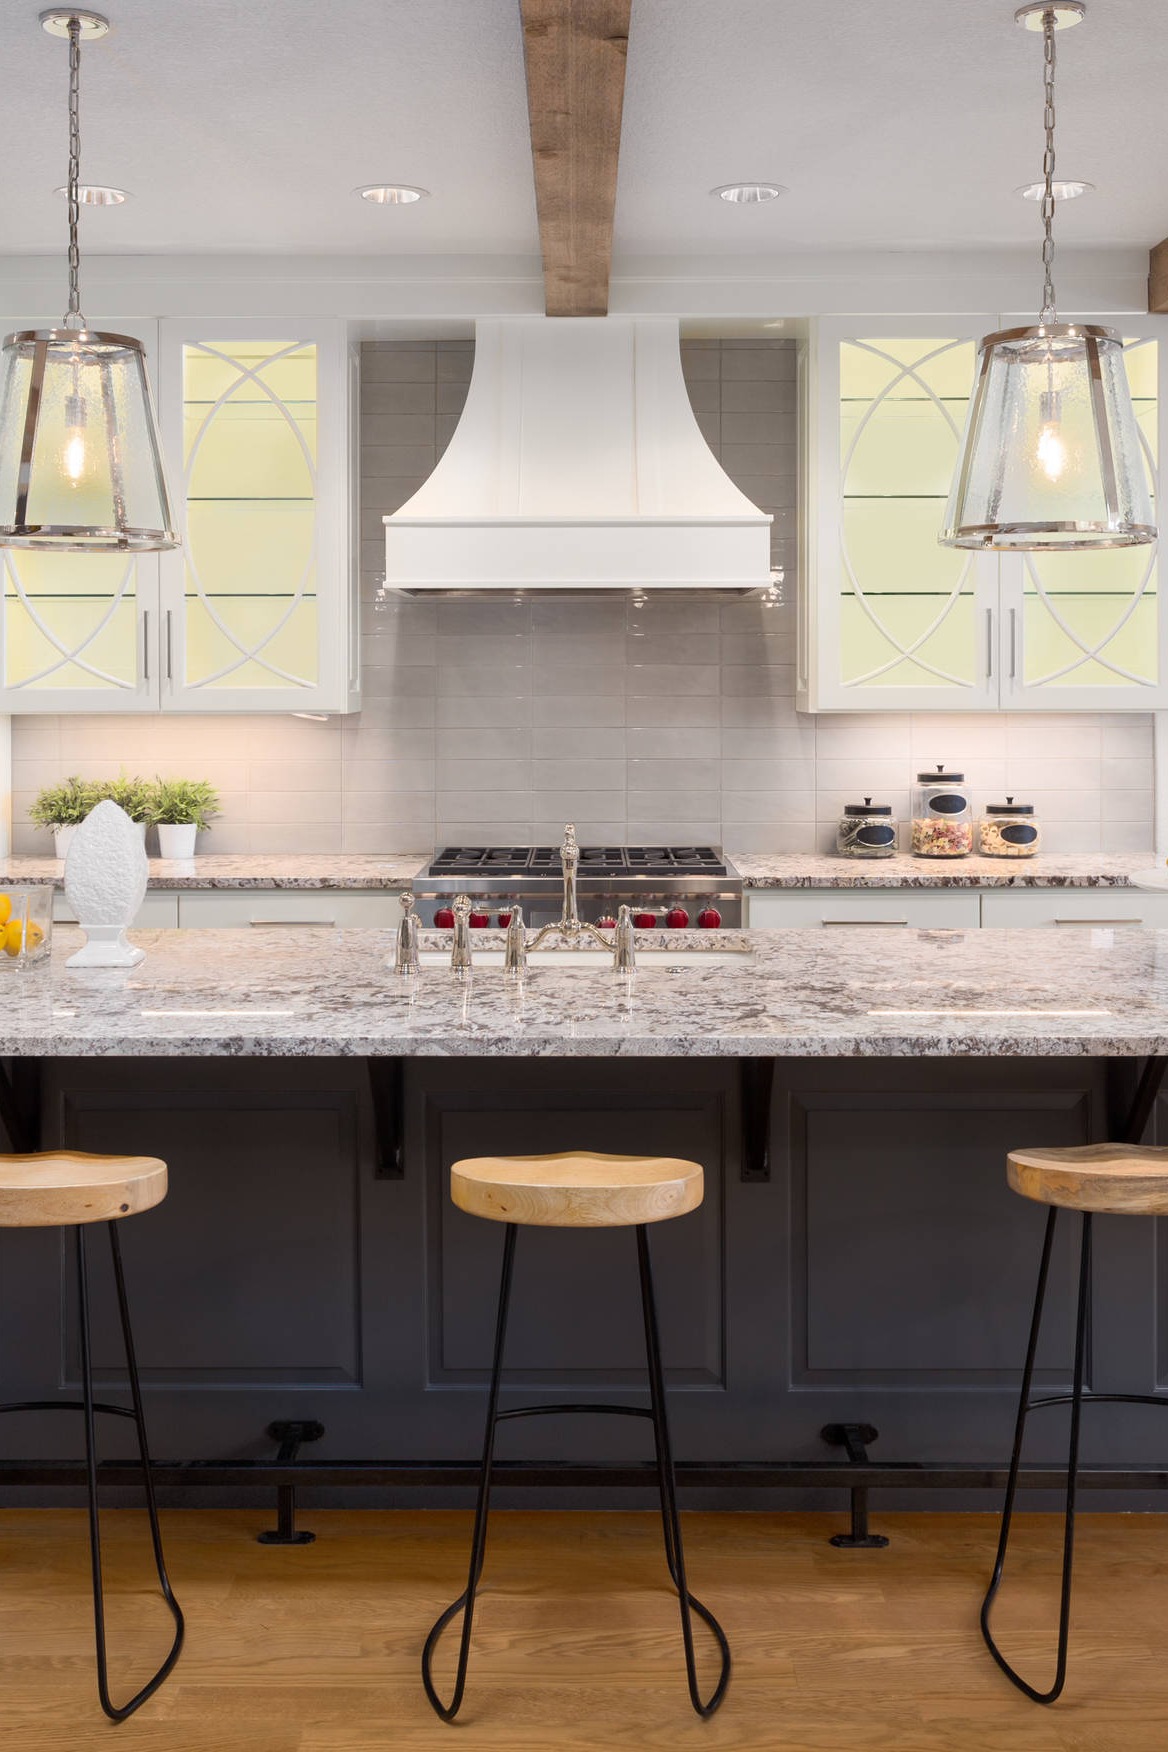 Bianco Antico Granite Countertops White Cabinets Light Gray Subway Tile Backsplash Hardwood Flooring